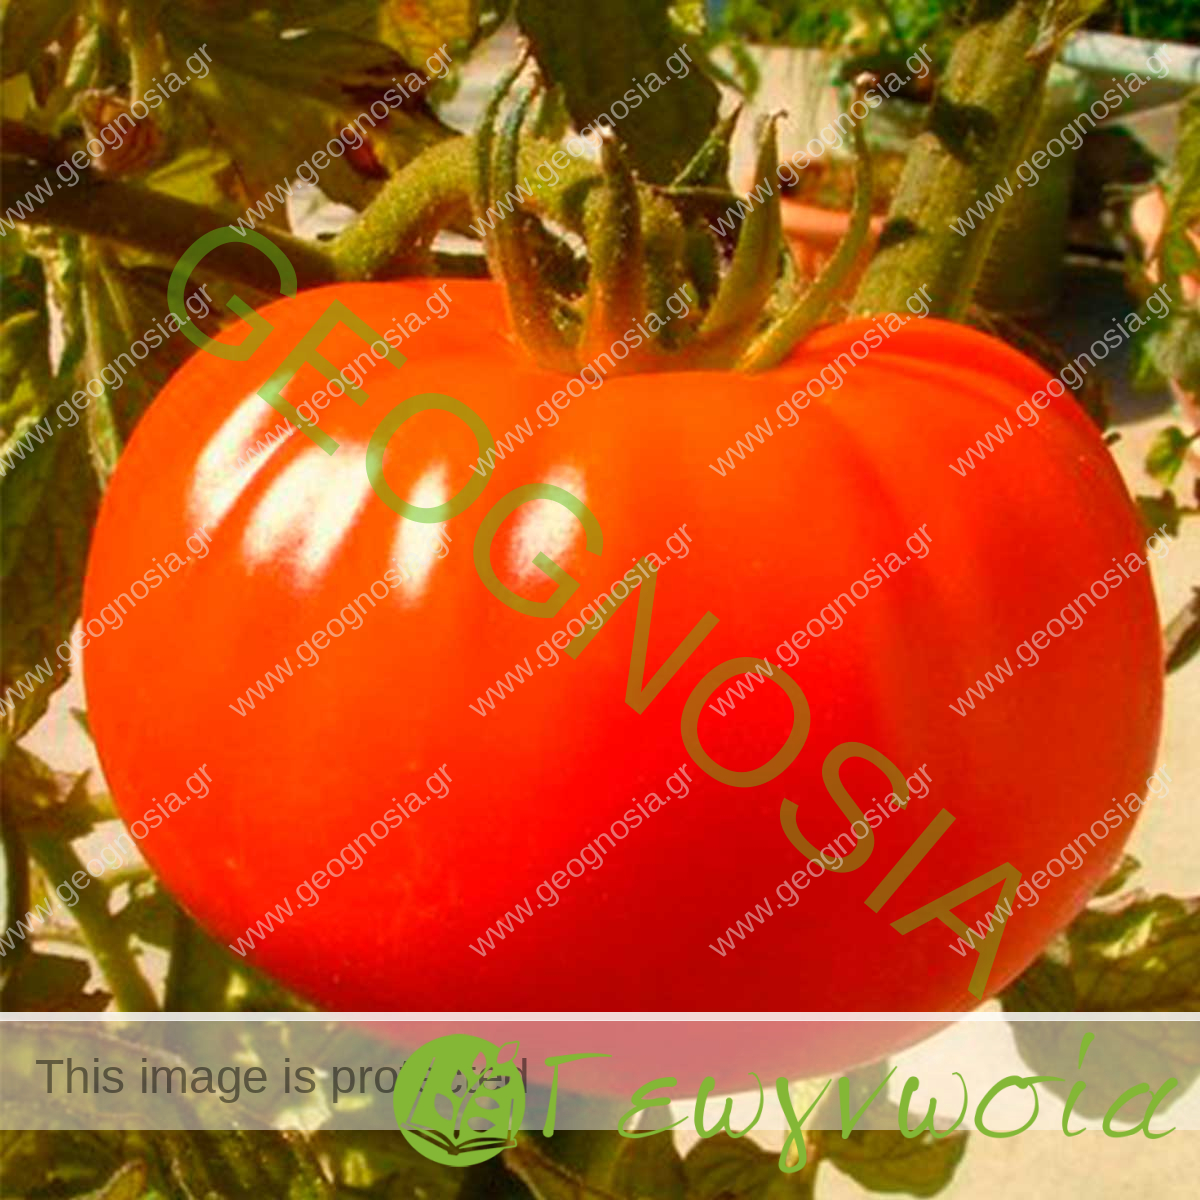 sporoi-tomatas-boa-f1-vilmorin